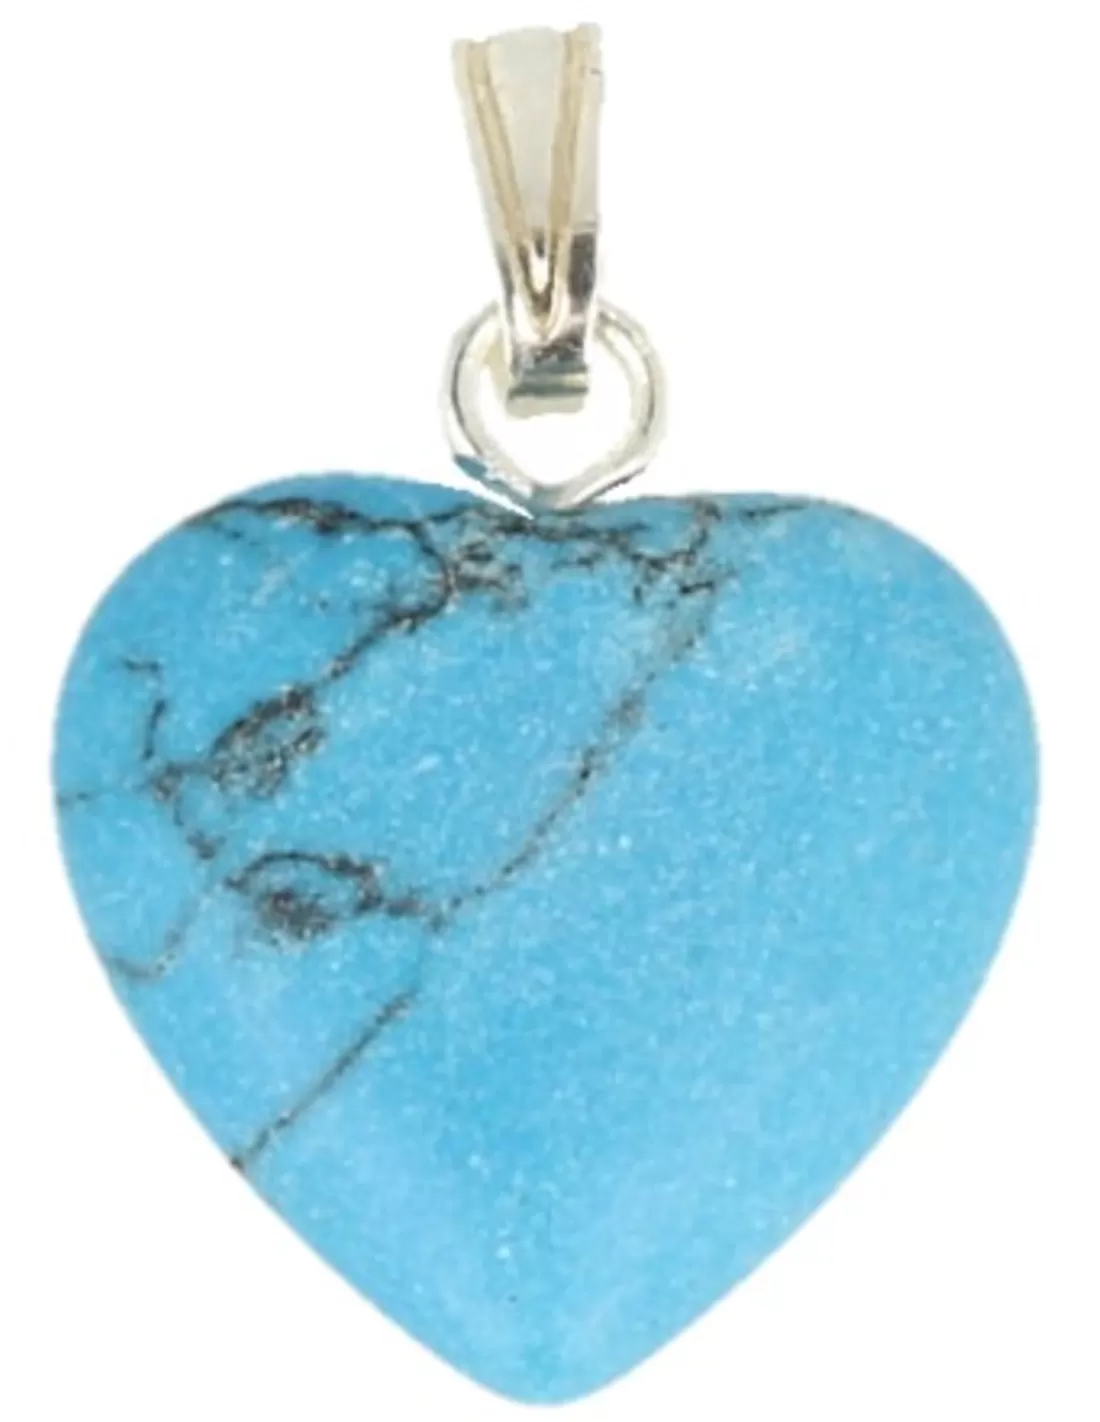 Howliet blauw hart hanger 14 mm (gekleurd)